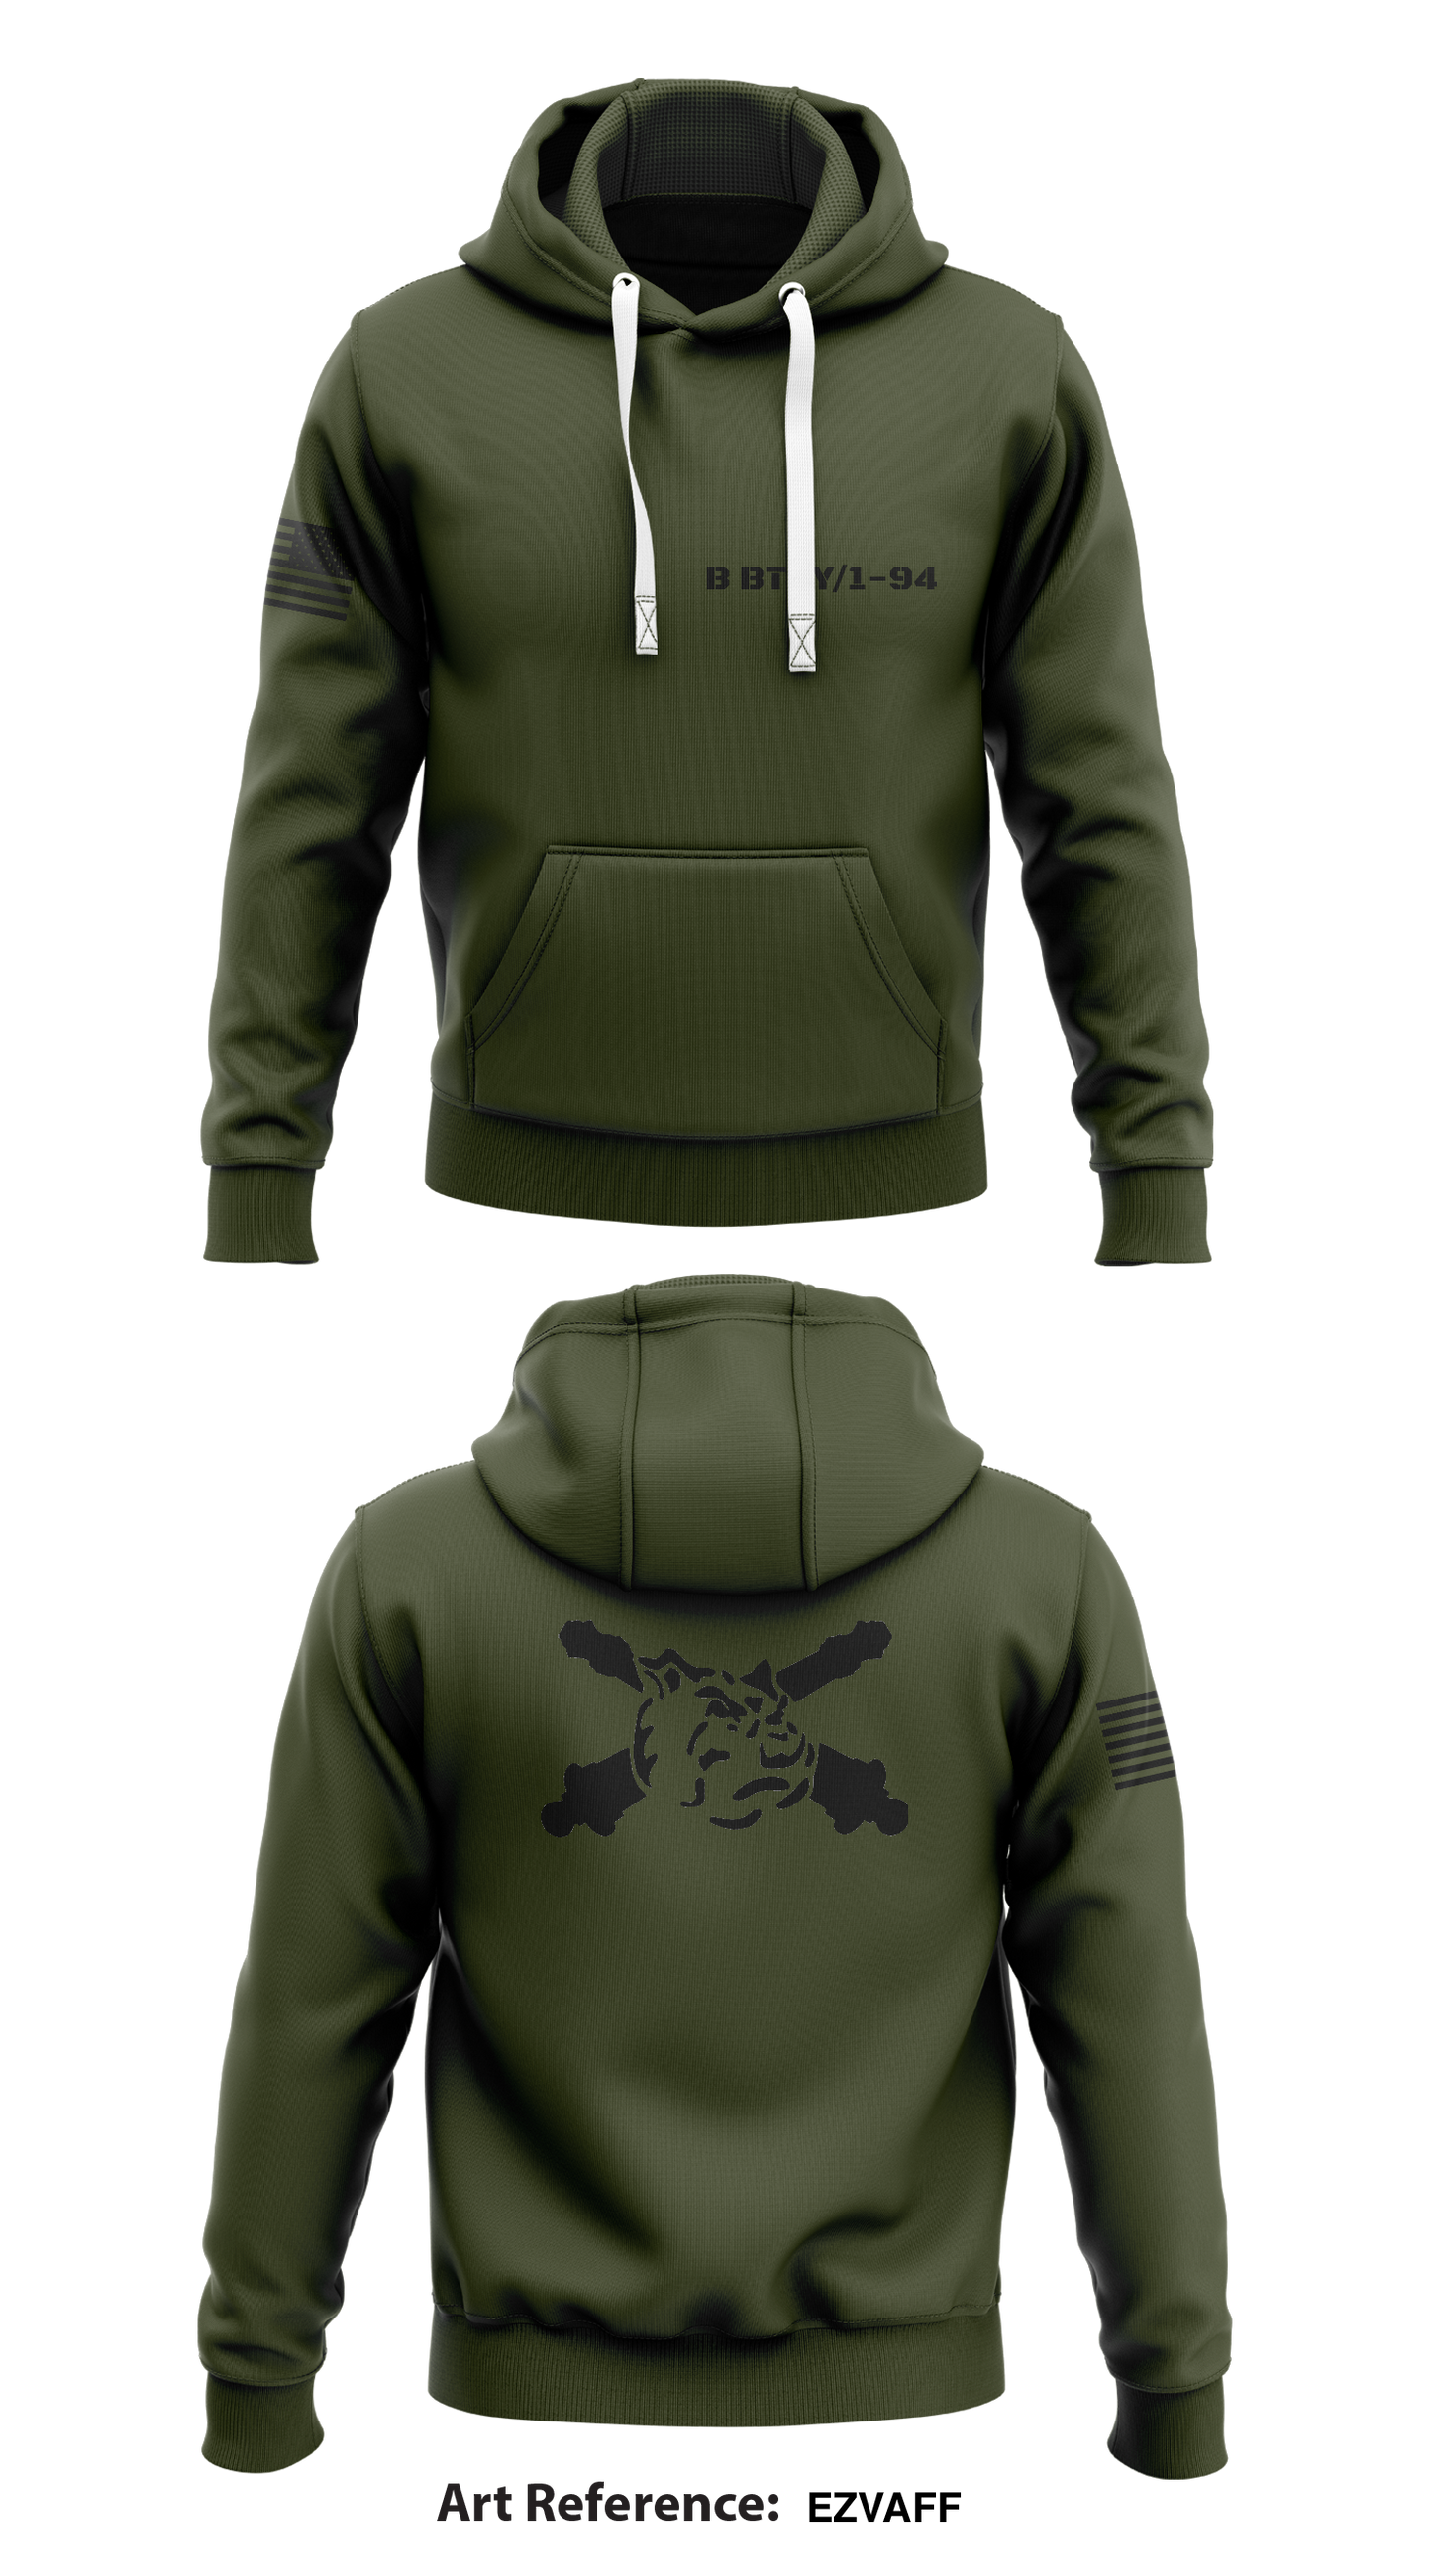 B BTRY-1-94 Core Men's Hooded Performance Sweatshirt - EzvAff